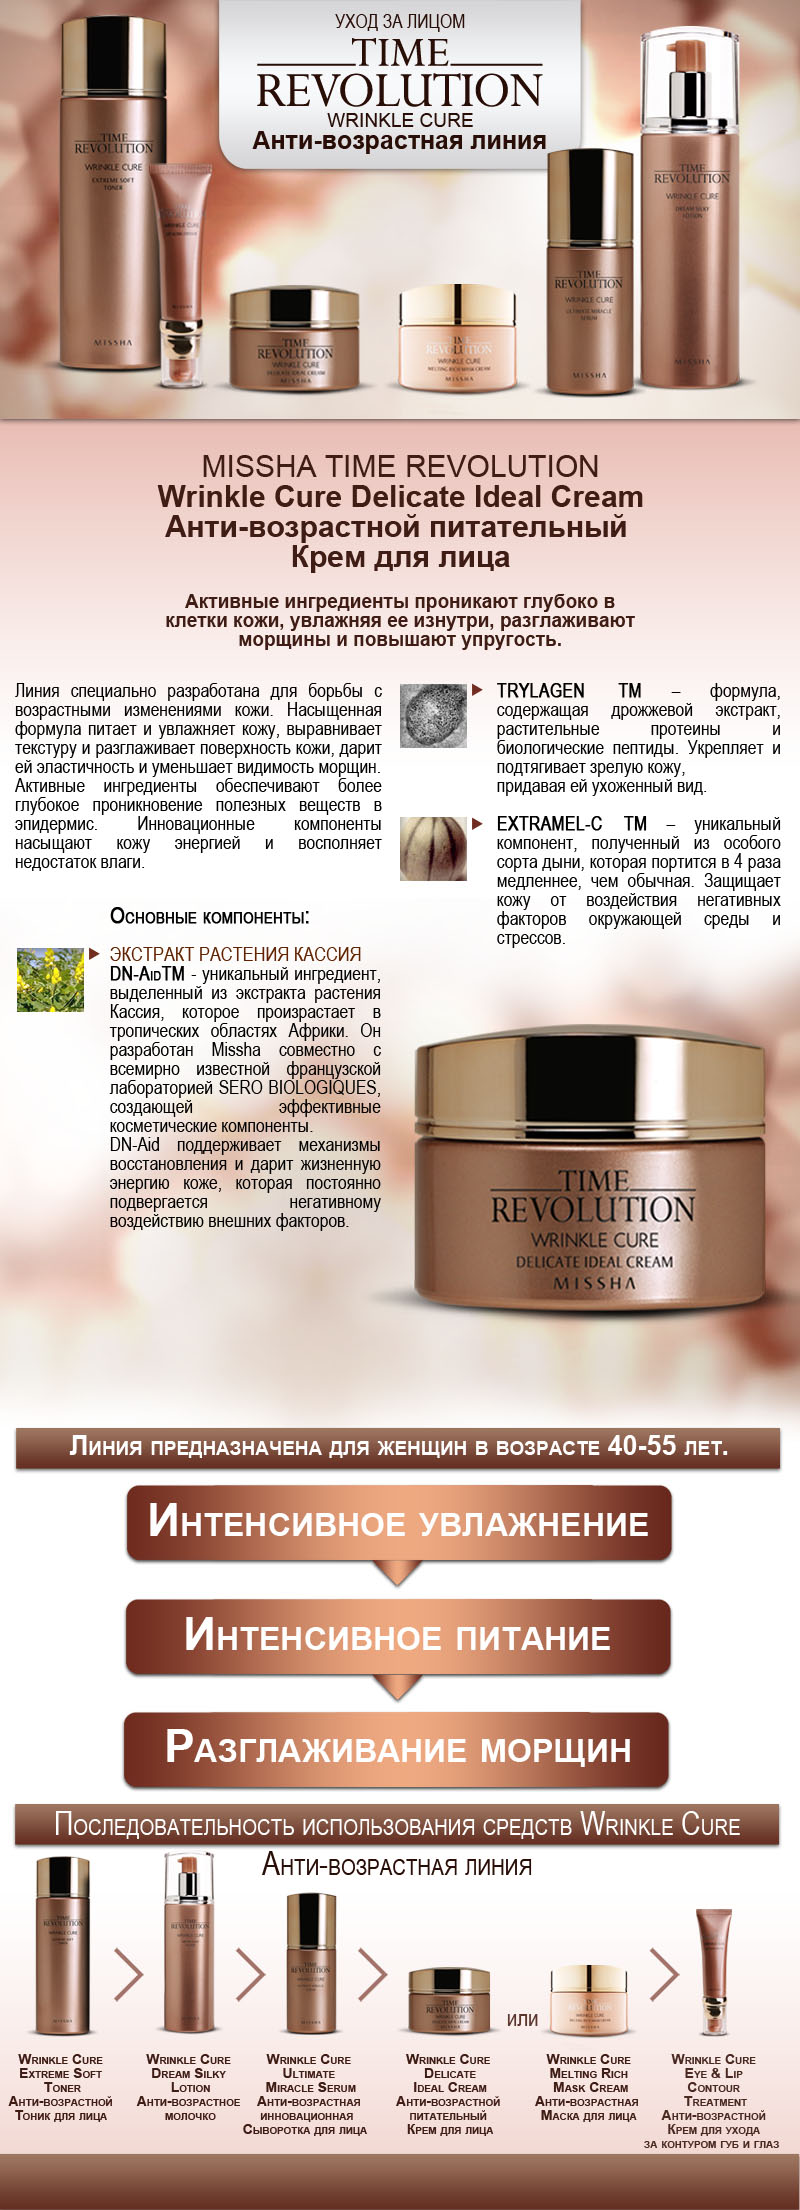 Produse cosmetice Dr. Sante